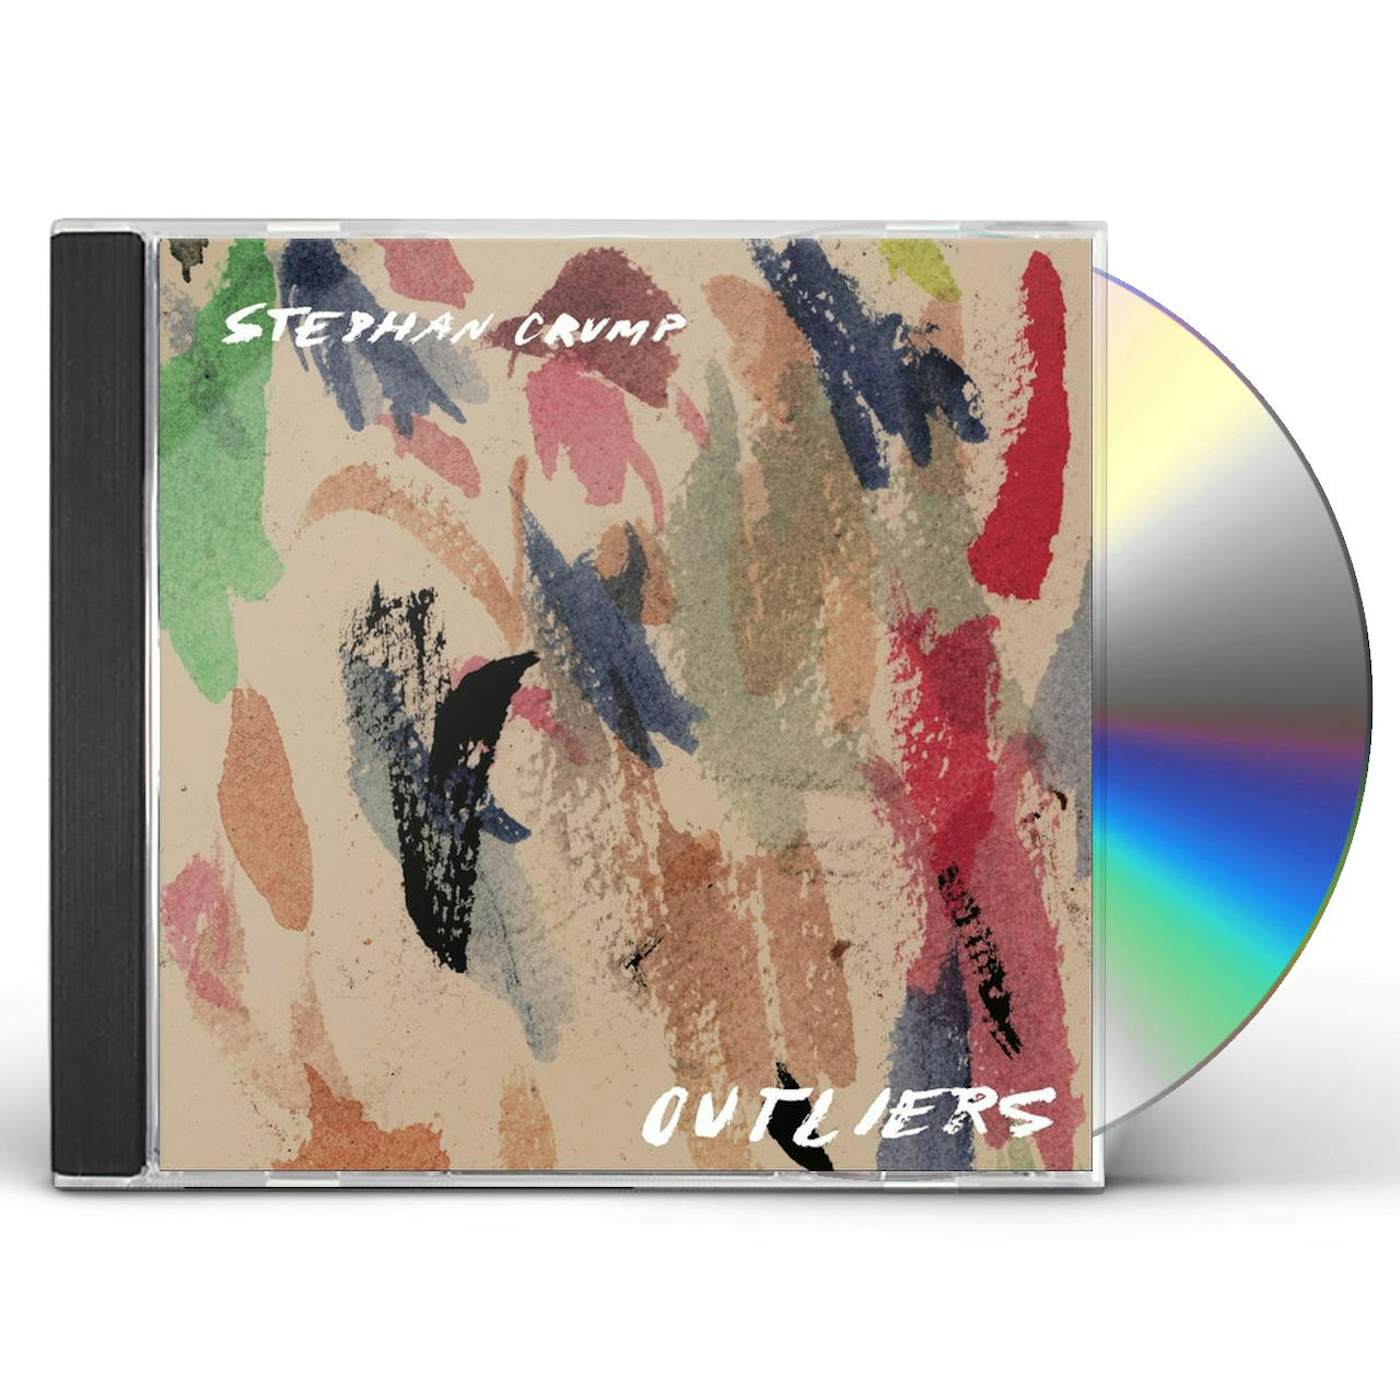 Stephan Crump OUTLIERS CD